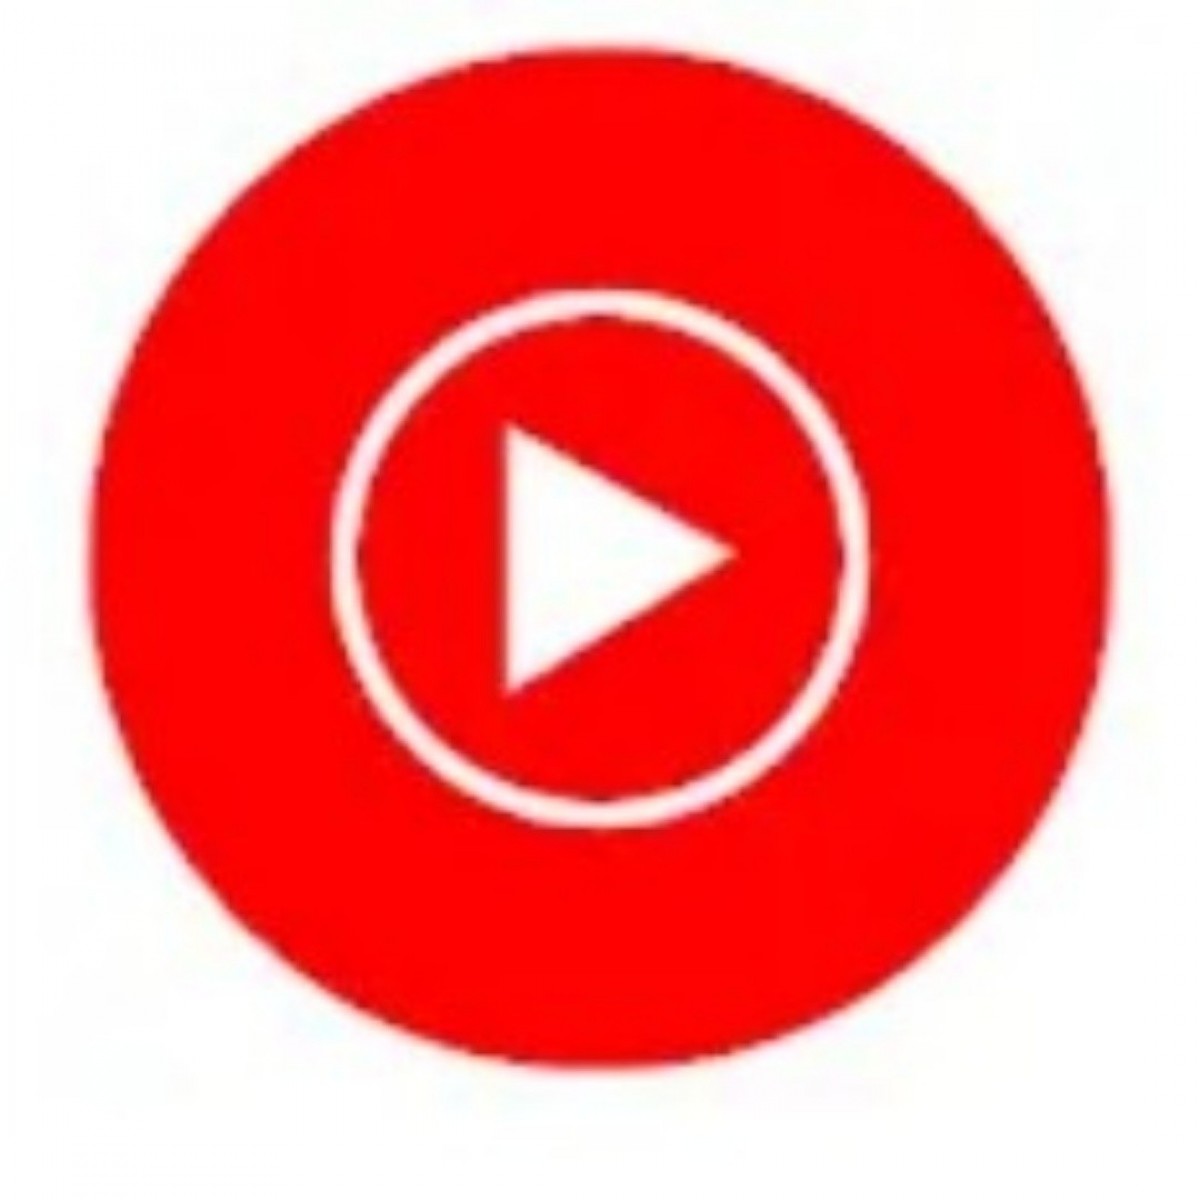 youtube music mod apk download